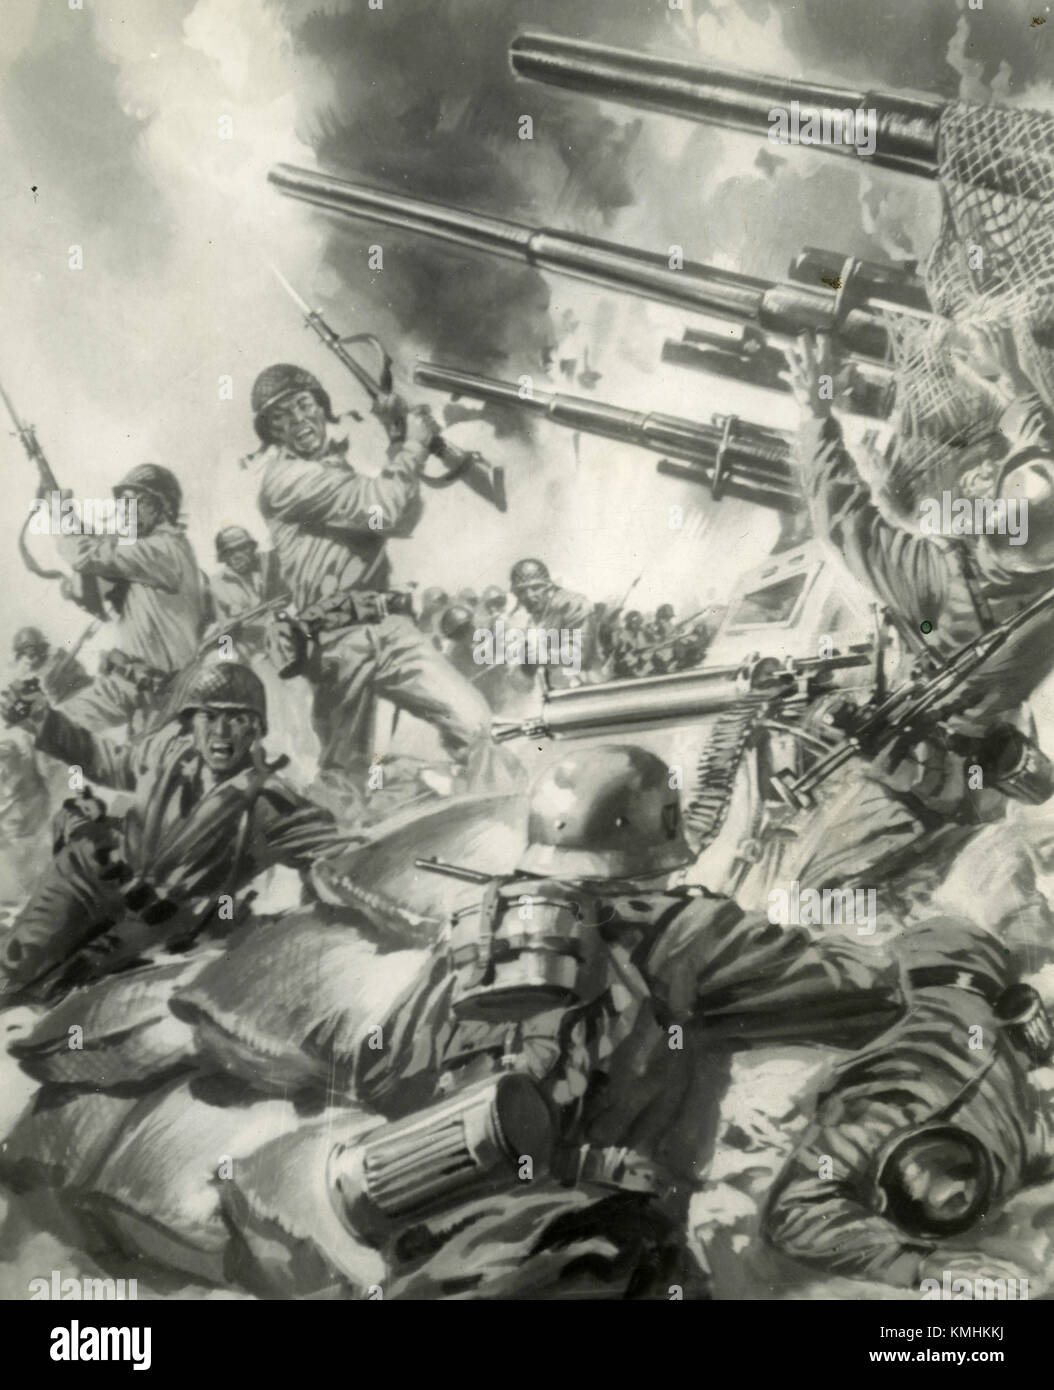 war movie posters